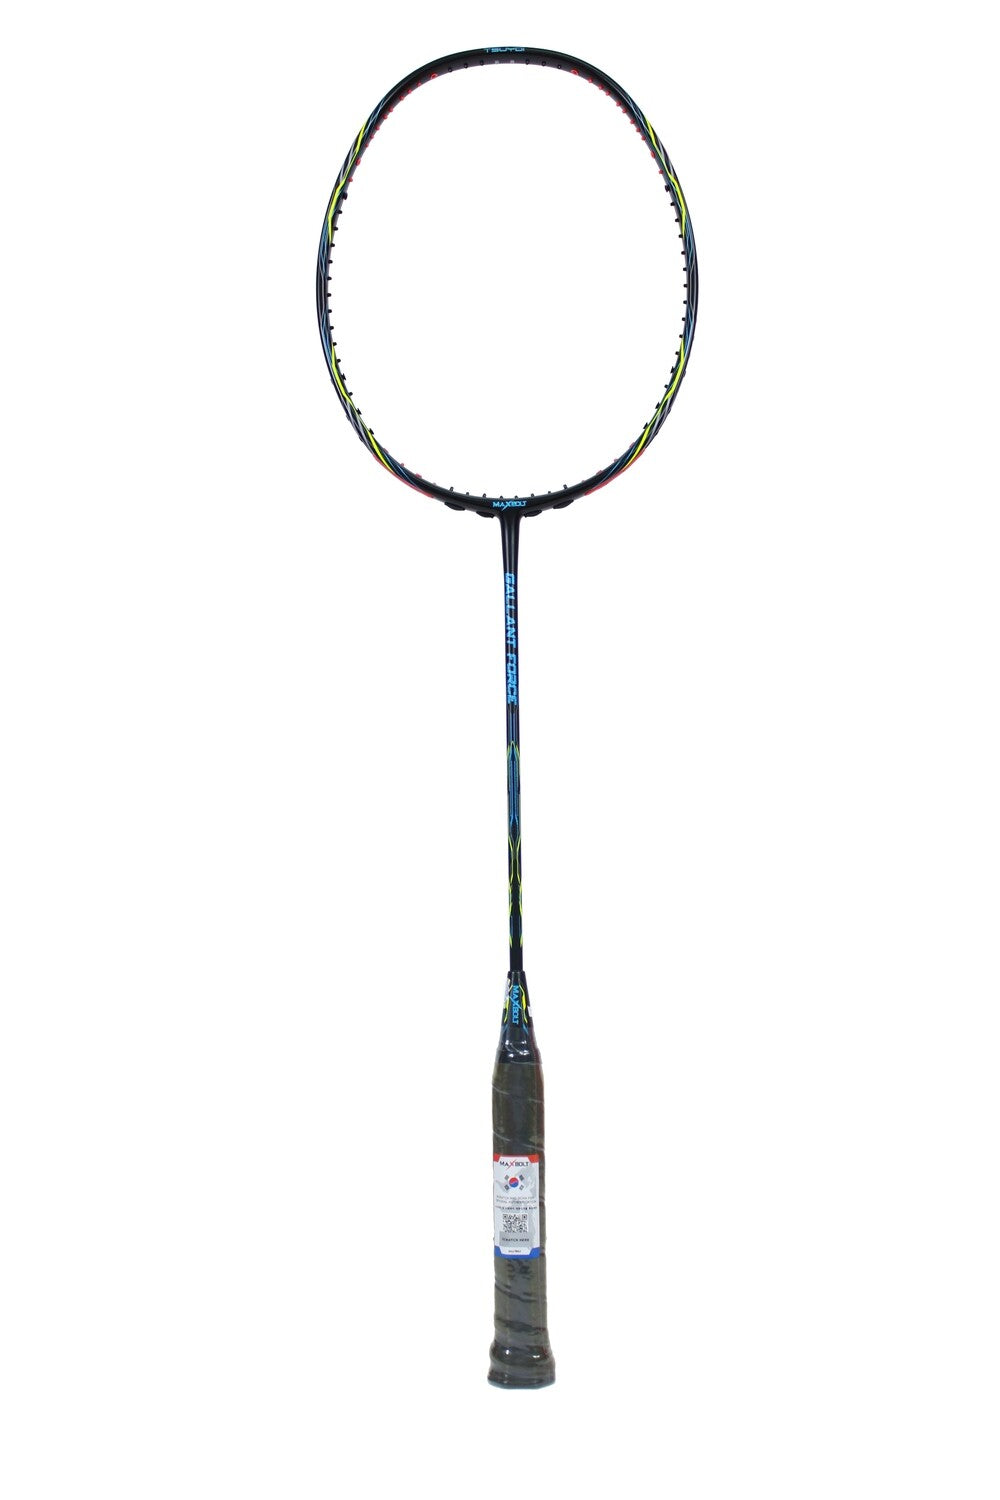 Maxbolt Gallant Force Badminton Racket